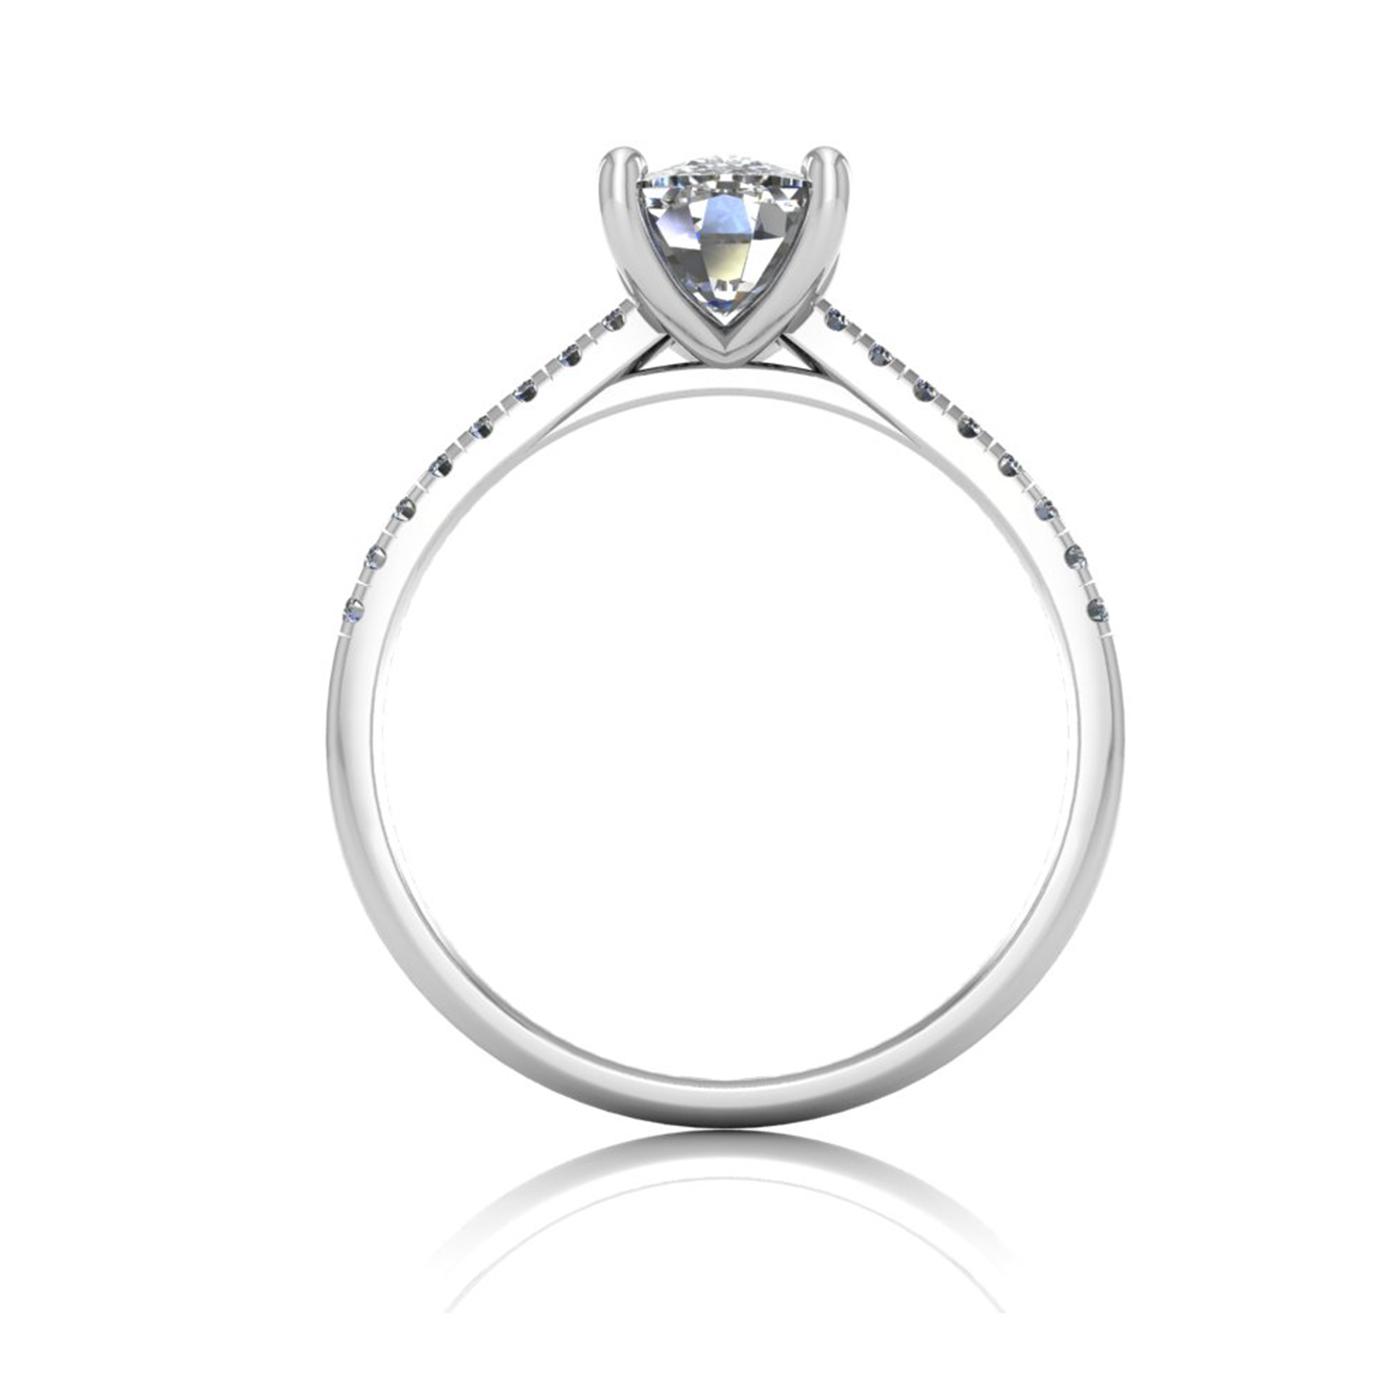 18k white gold  4 prongs cushion cut diamond engagement ring with whisper thin pavÉ set band